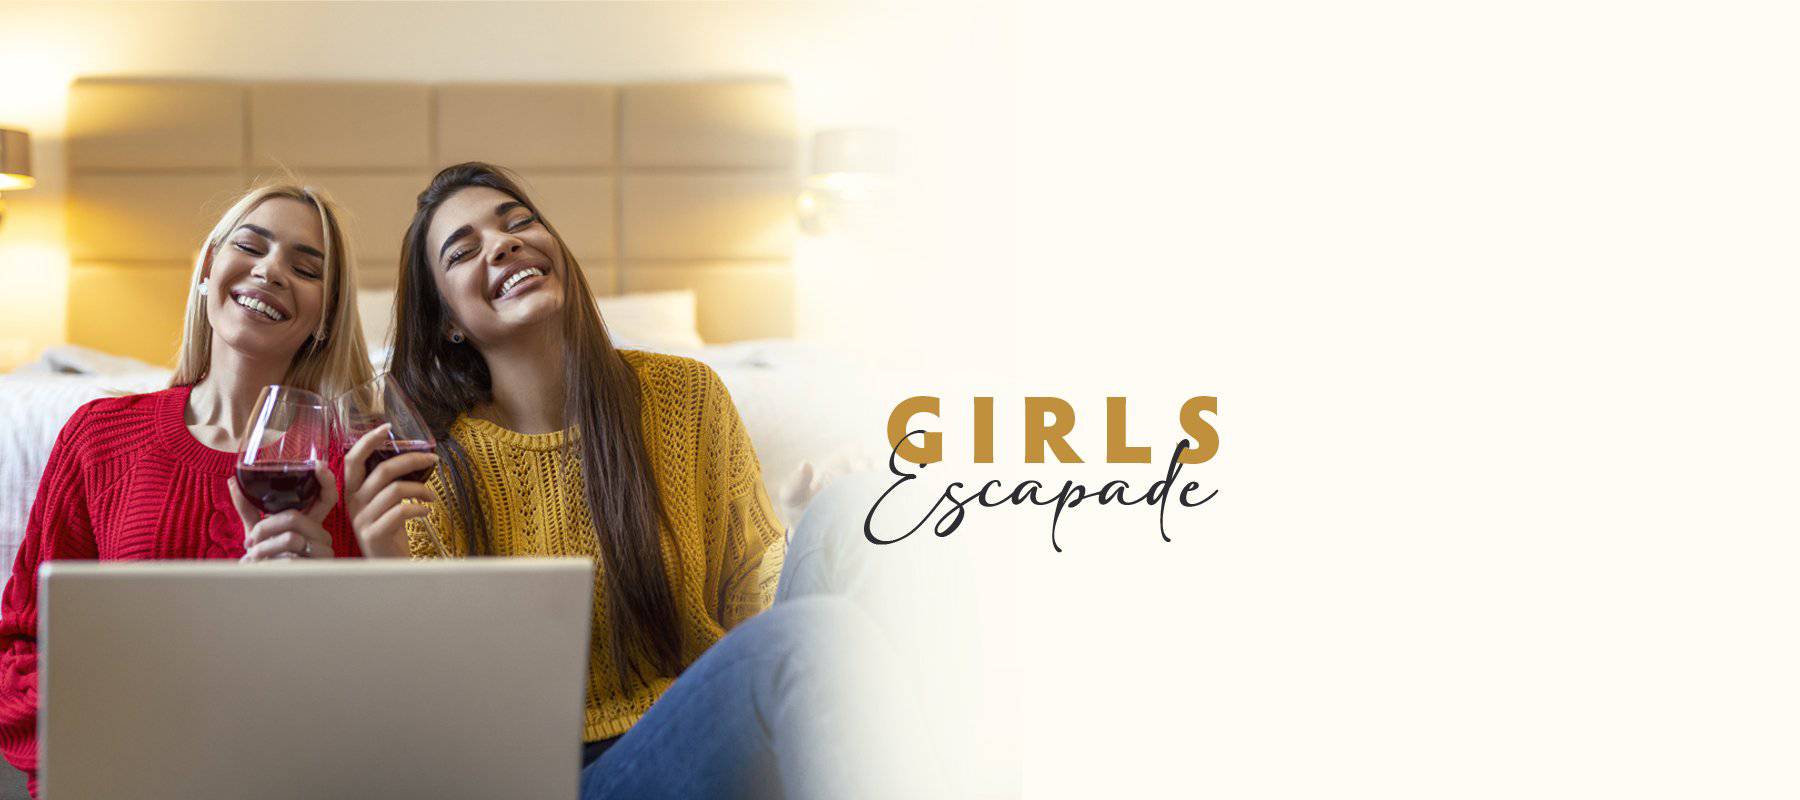 Girls Escapade Movich Hotels